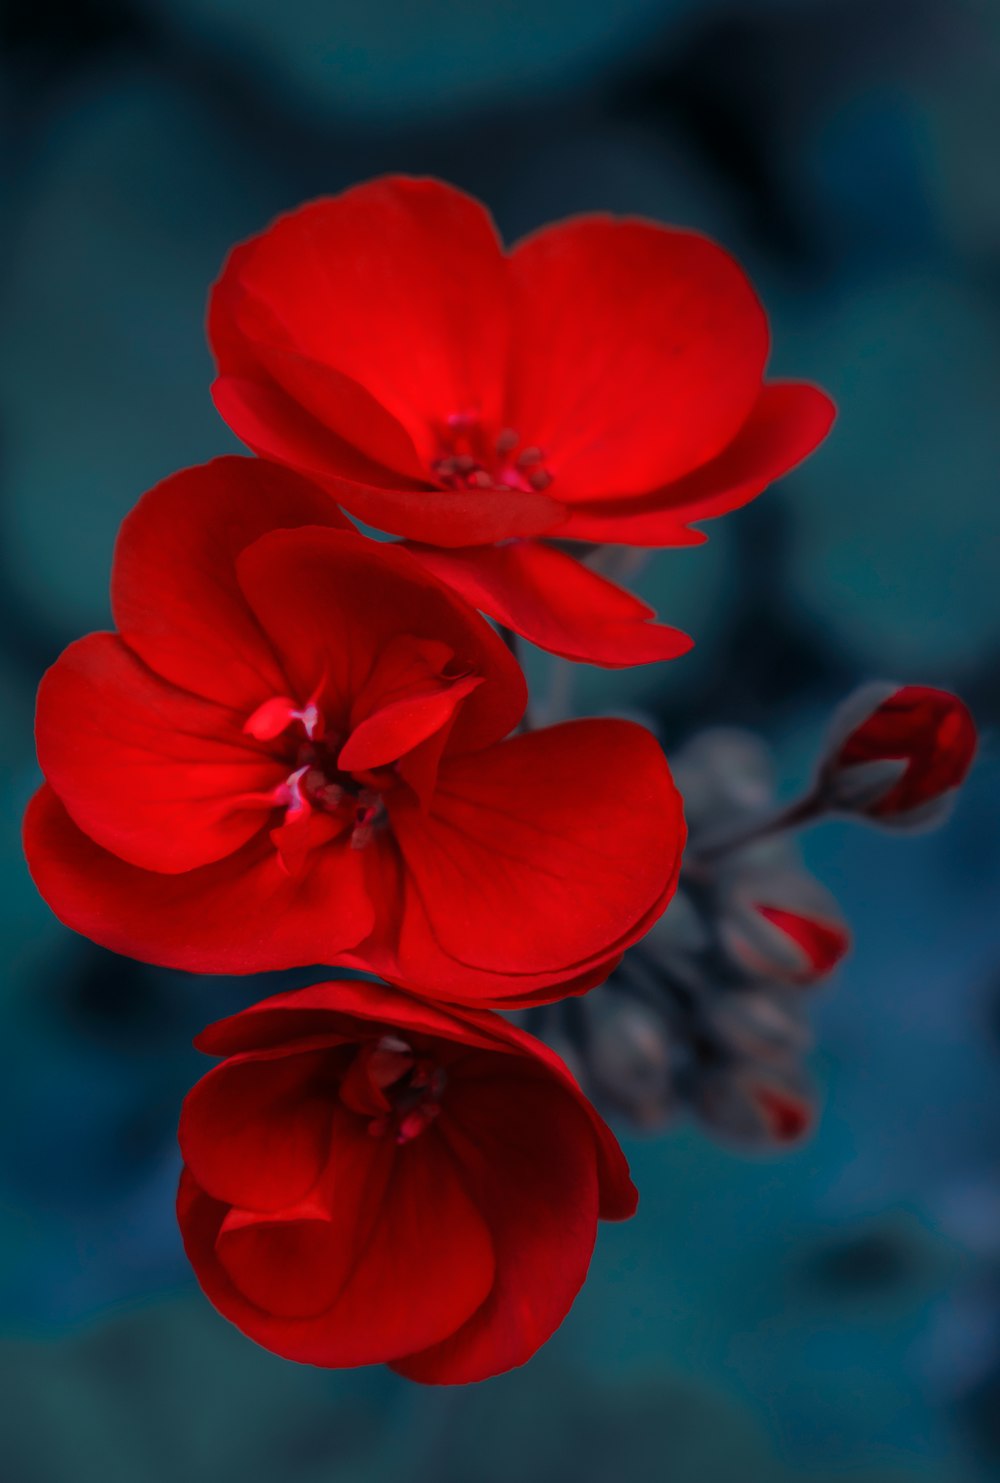 30k+ Unique Flower Pictures | Download Free Images on Unsplash